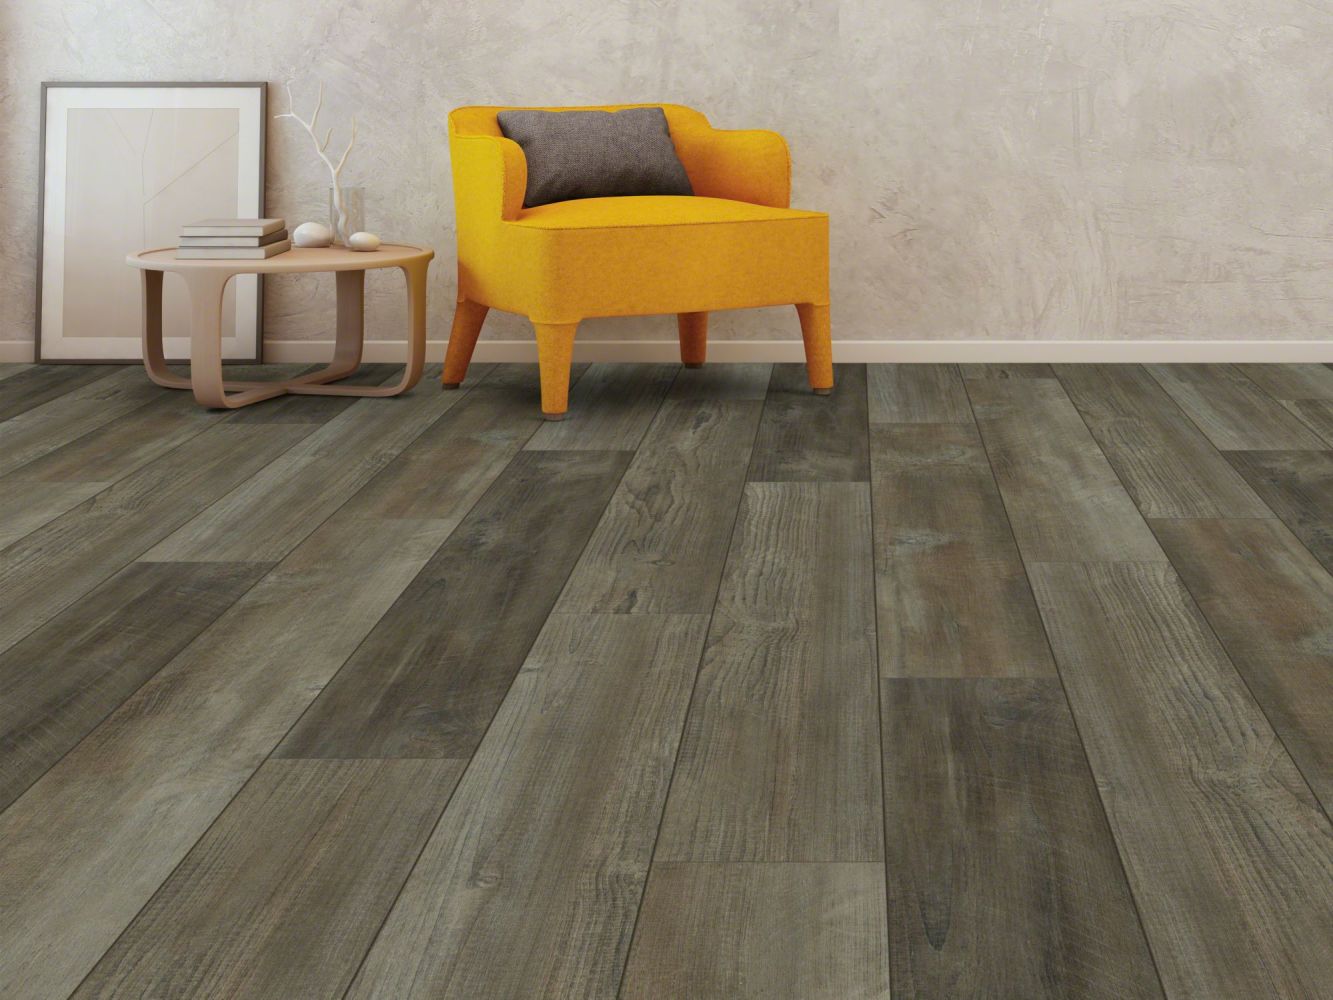 Shaw Floors Resilient Home Foundations Moonlit Pine 720c Plus Antique Pine 05006_514RG